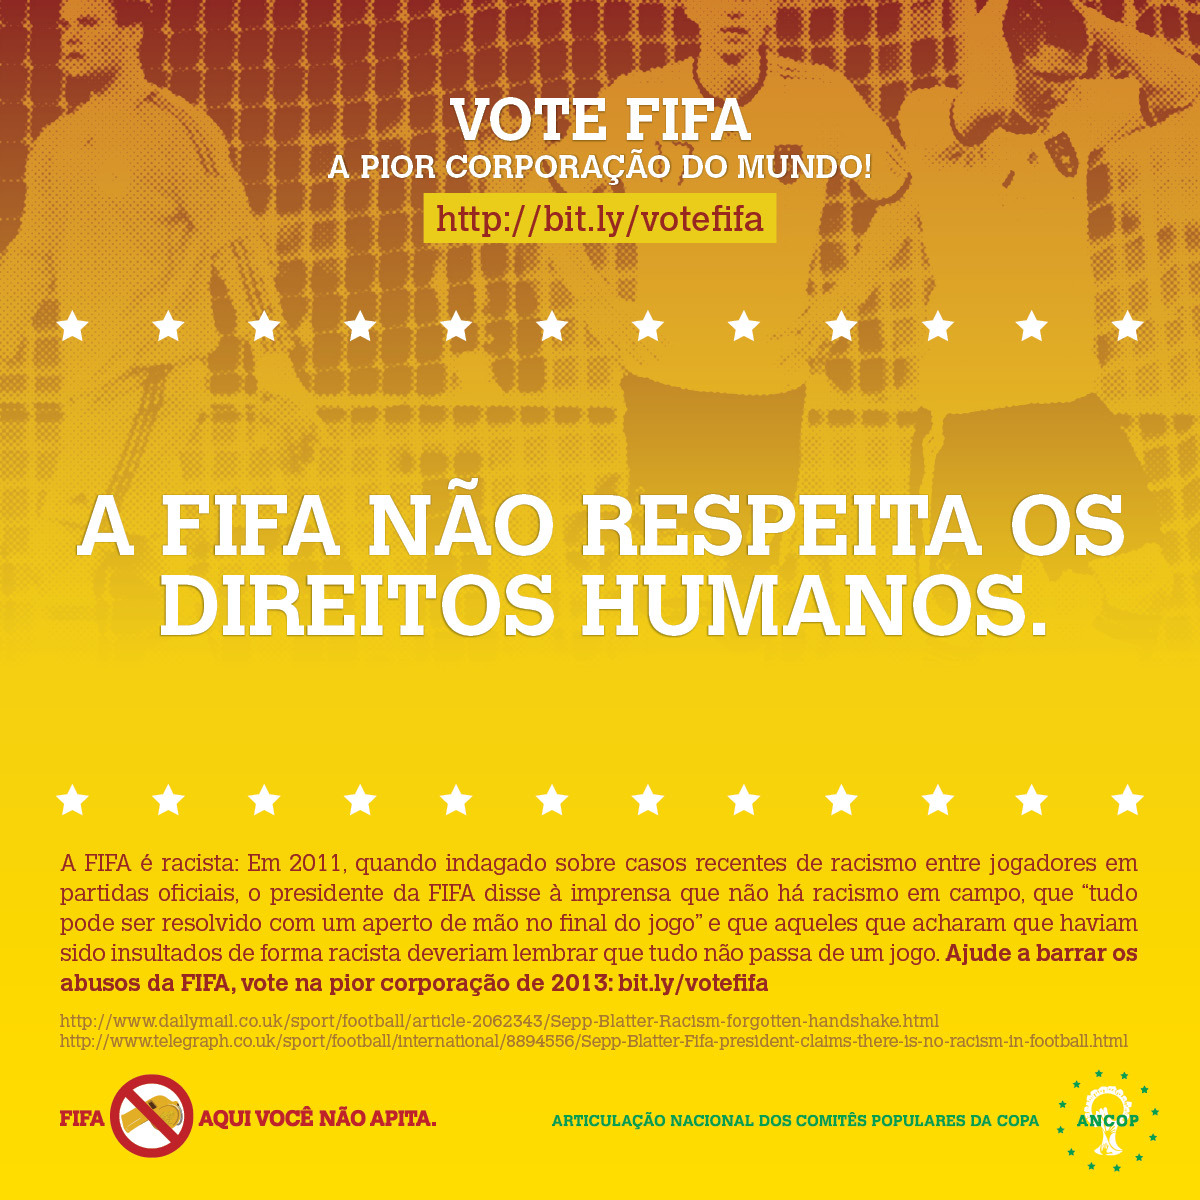 Contra o racismo nos esportes, VOTE: http://bit.ly/votefifa